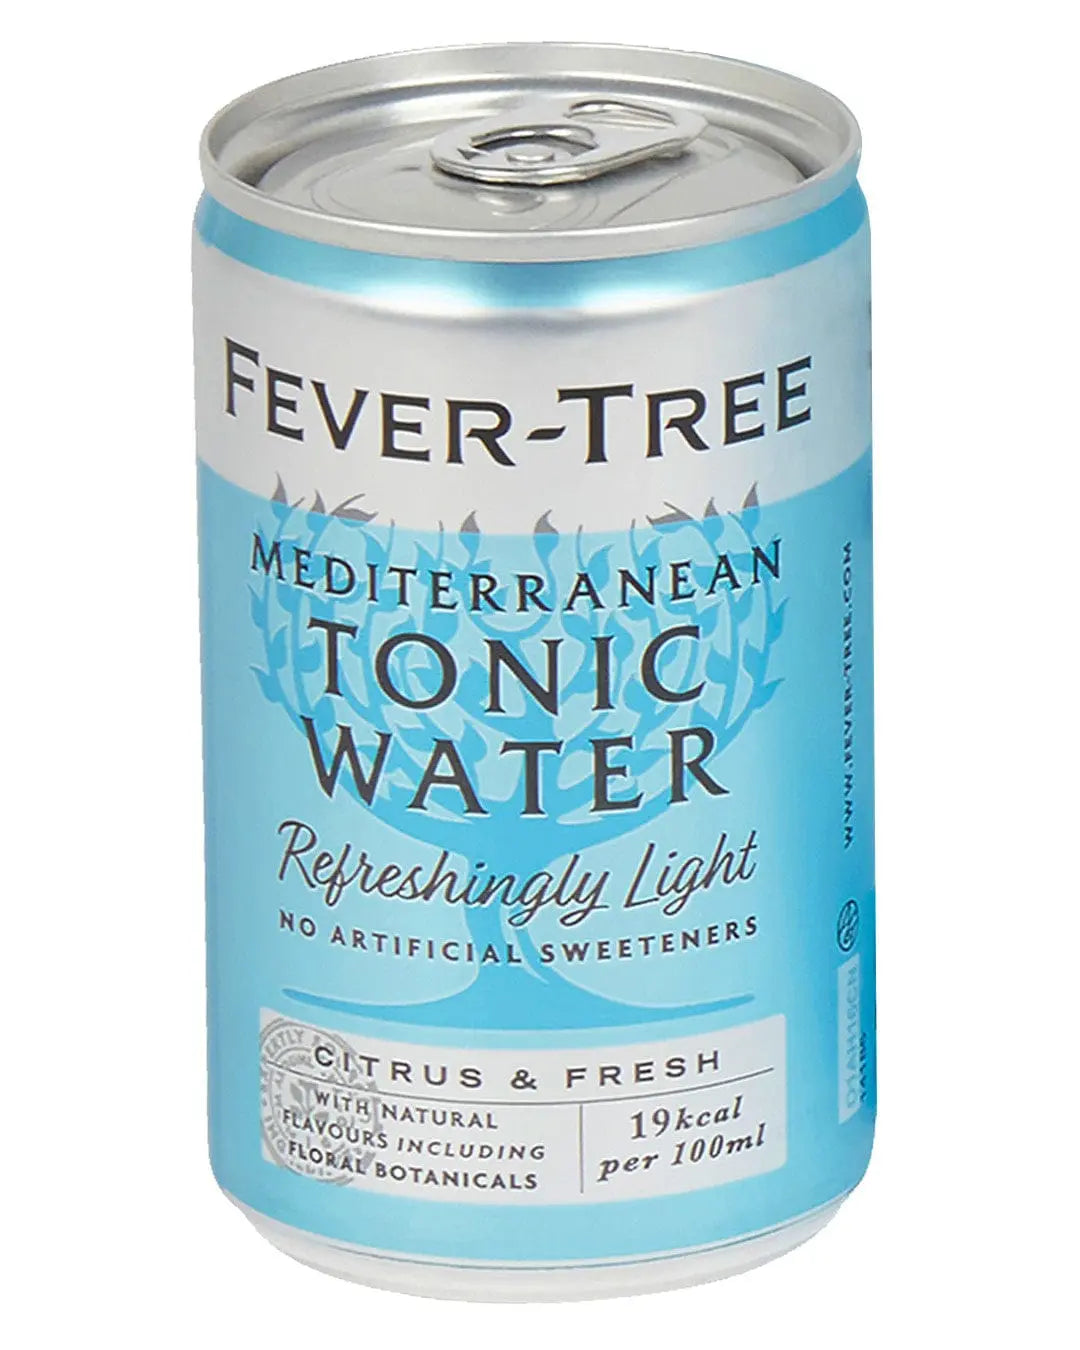 Fever-Tree Refreshingly Light Mediterranean Tonic Water, 150 ml Tonics 5060108452137